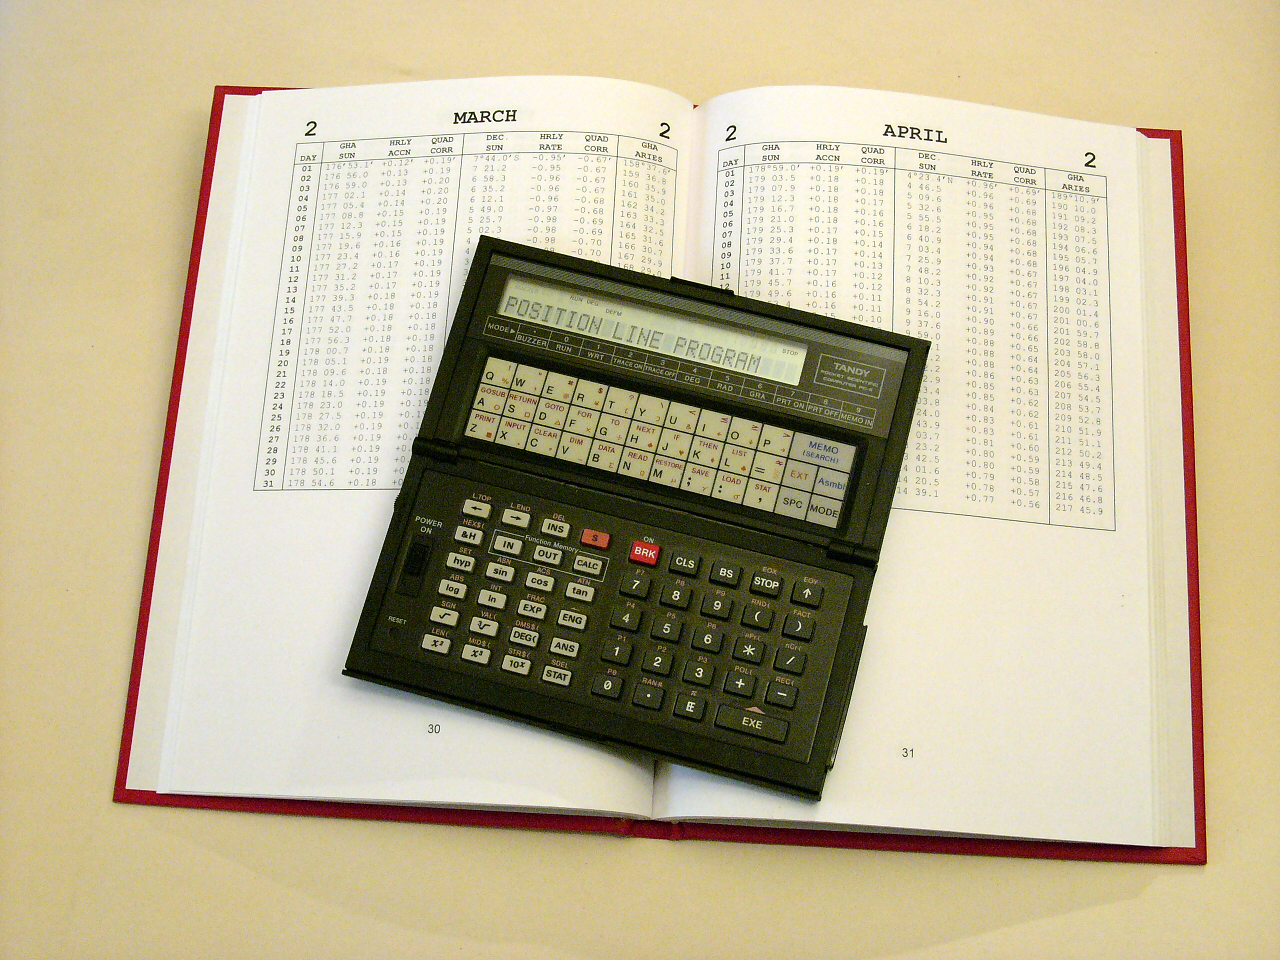 calculator.jpg - 1401144 Bytes